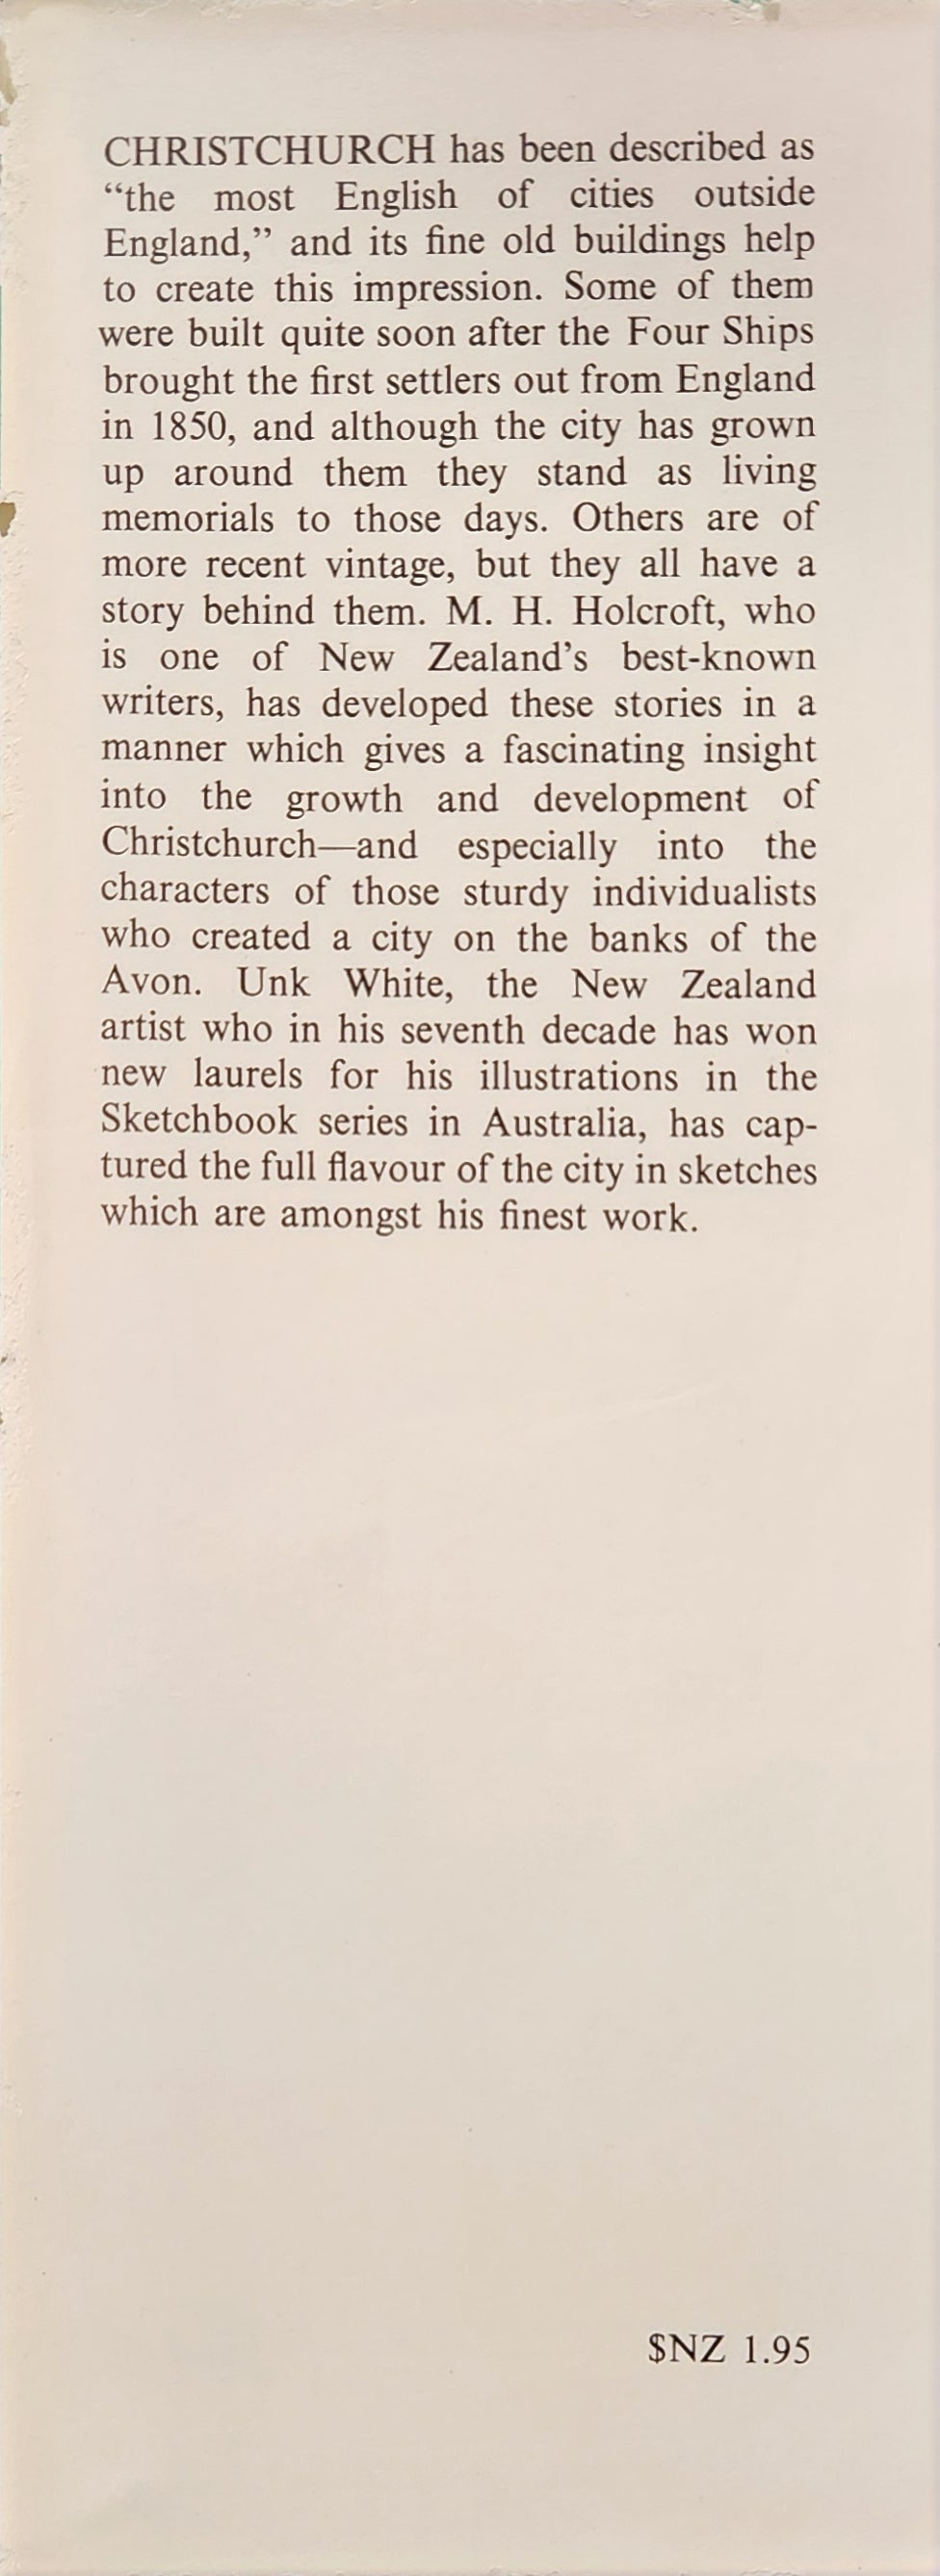 Christchurch Sketchbook